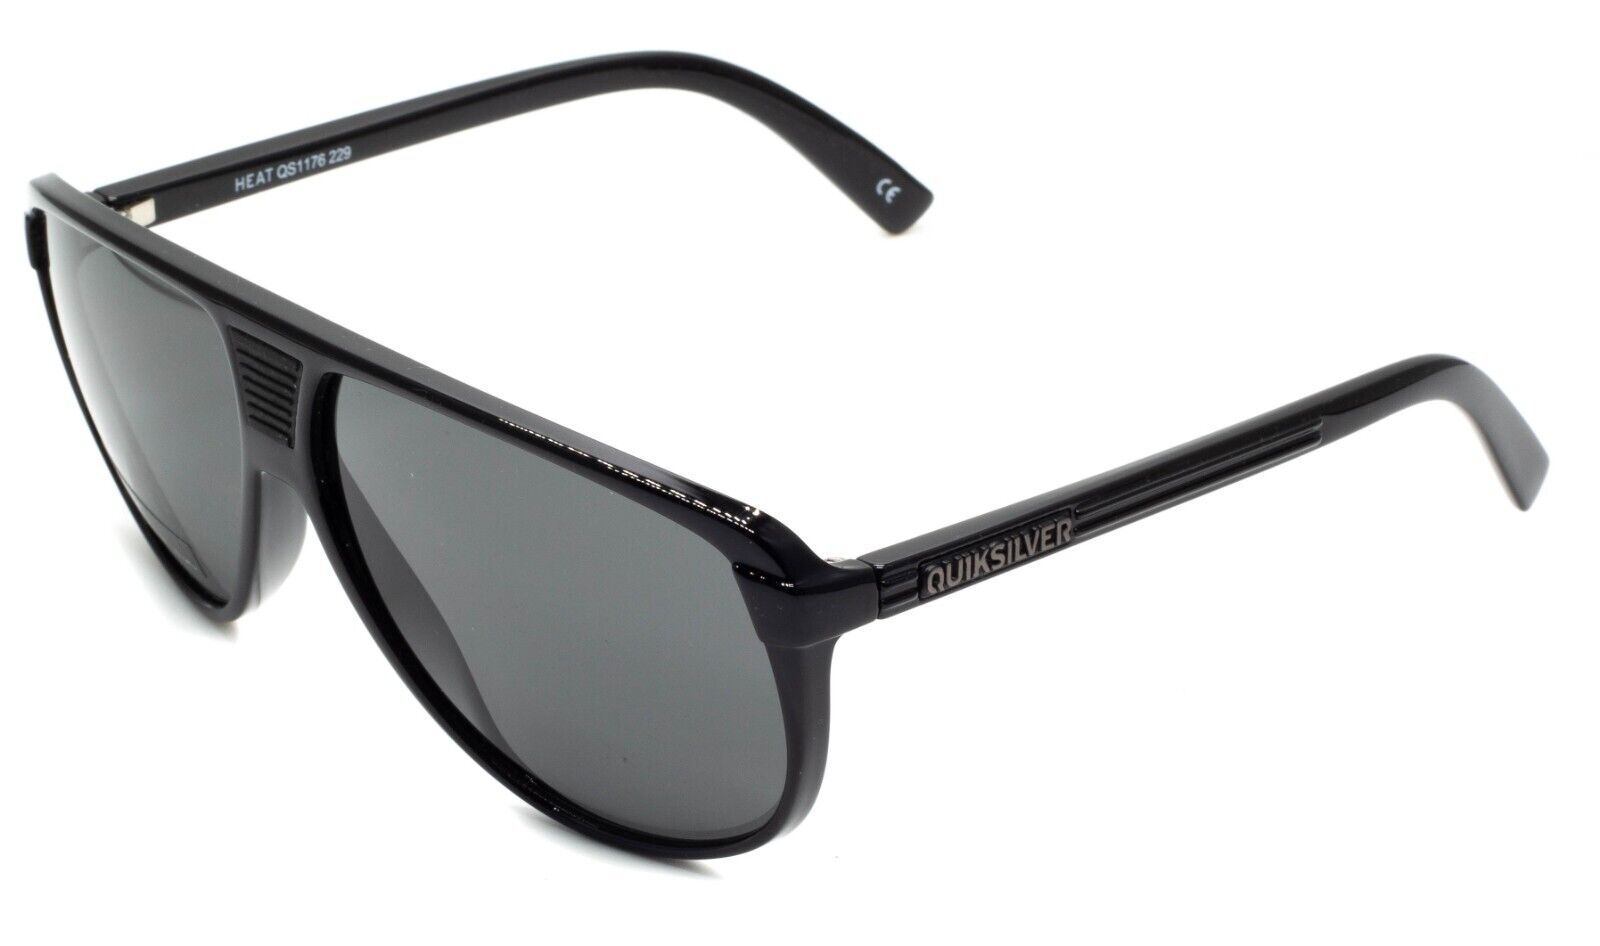 QUIKSILVER HEAT QS1176 229 60mm Sunglasses Shades Eyewear Frames - New ...